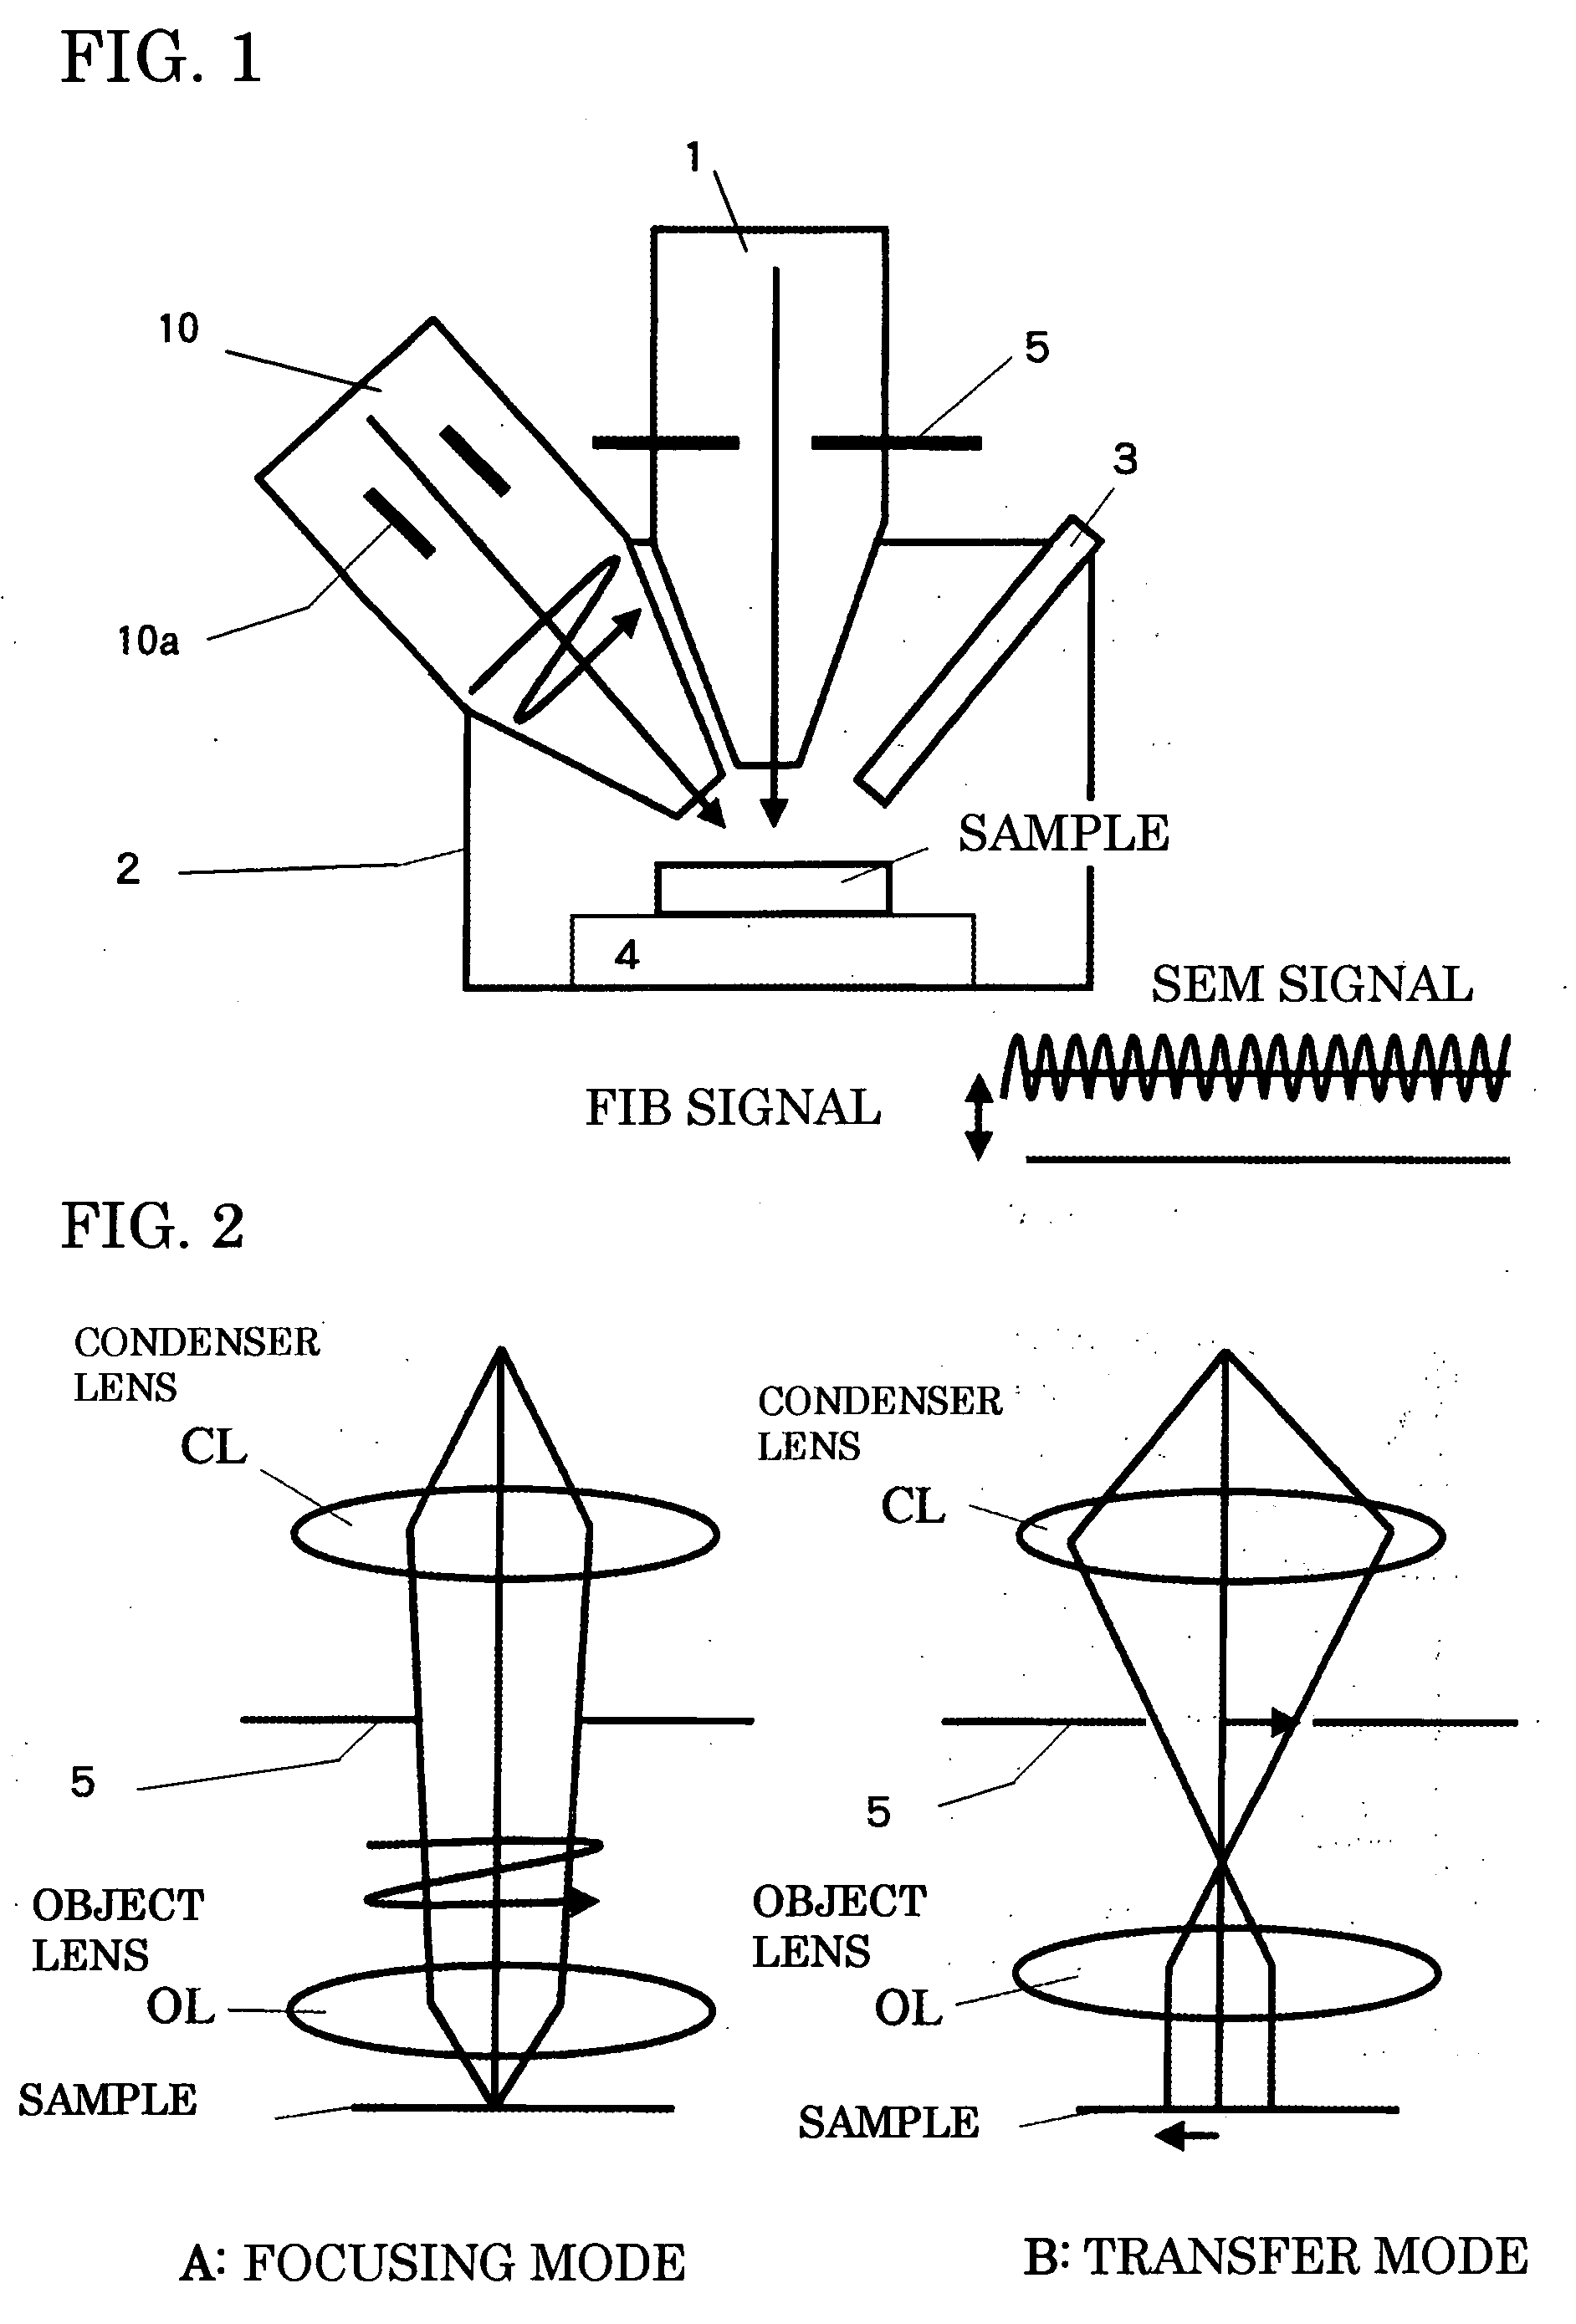 FIB-SEM complex apparatus